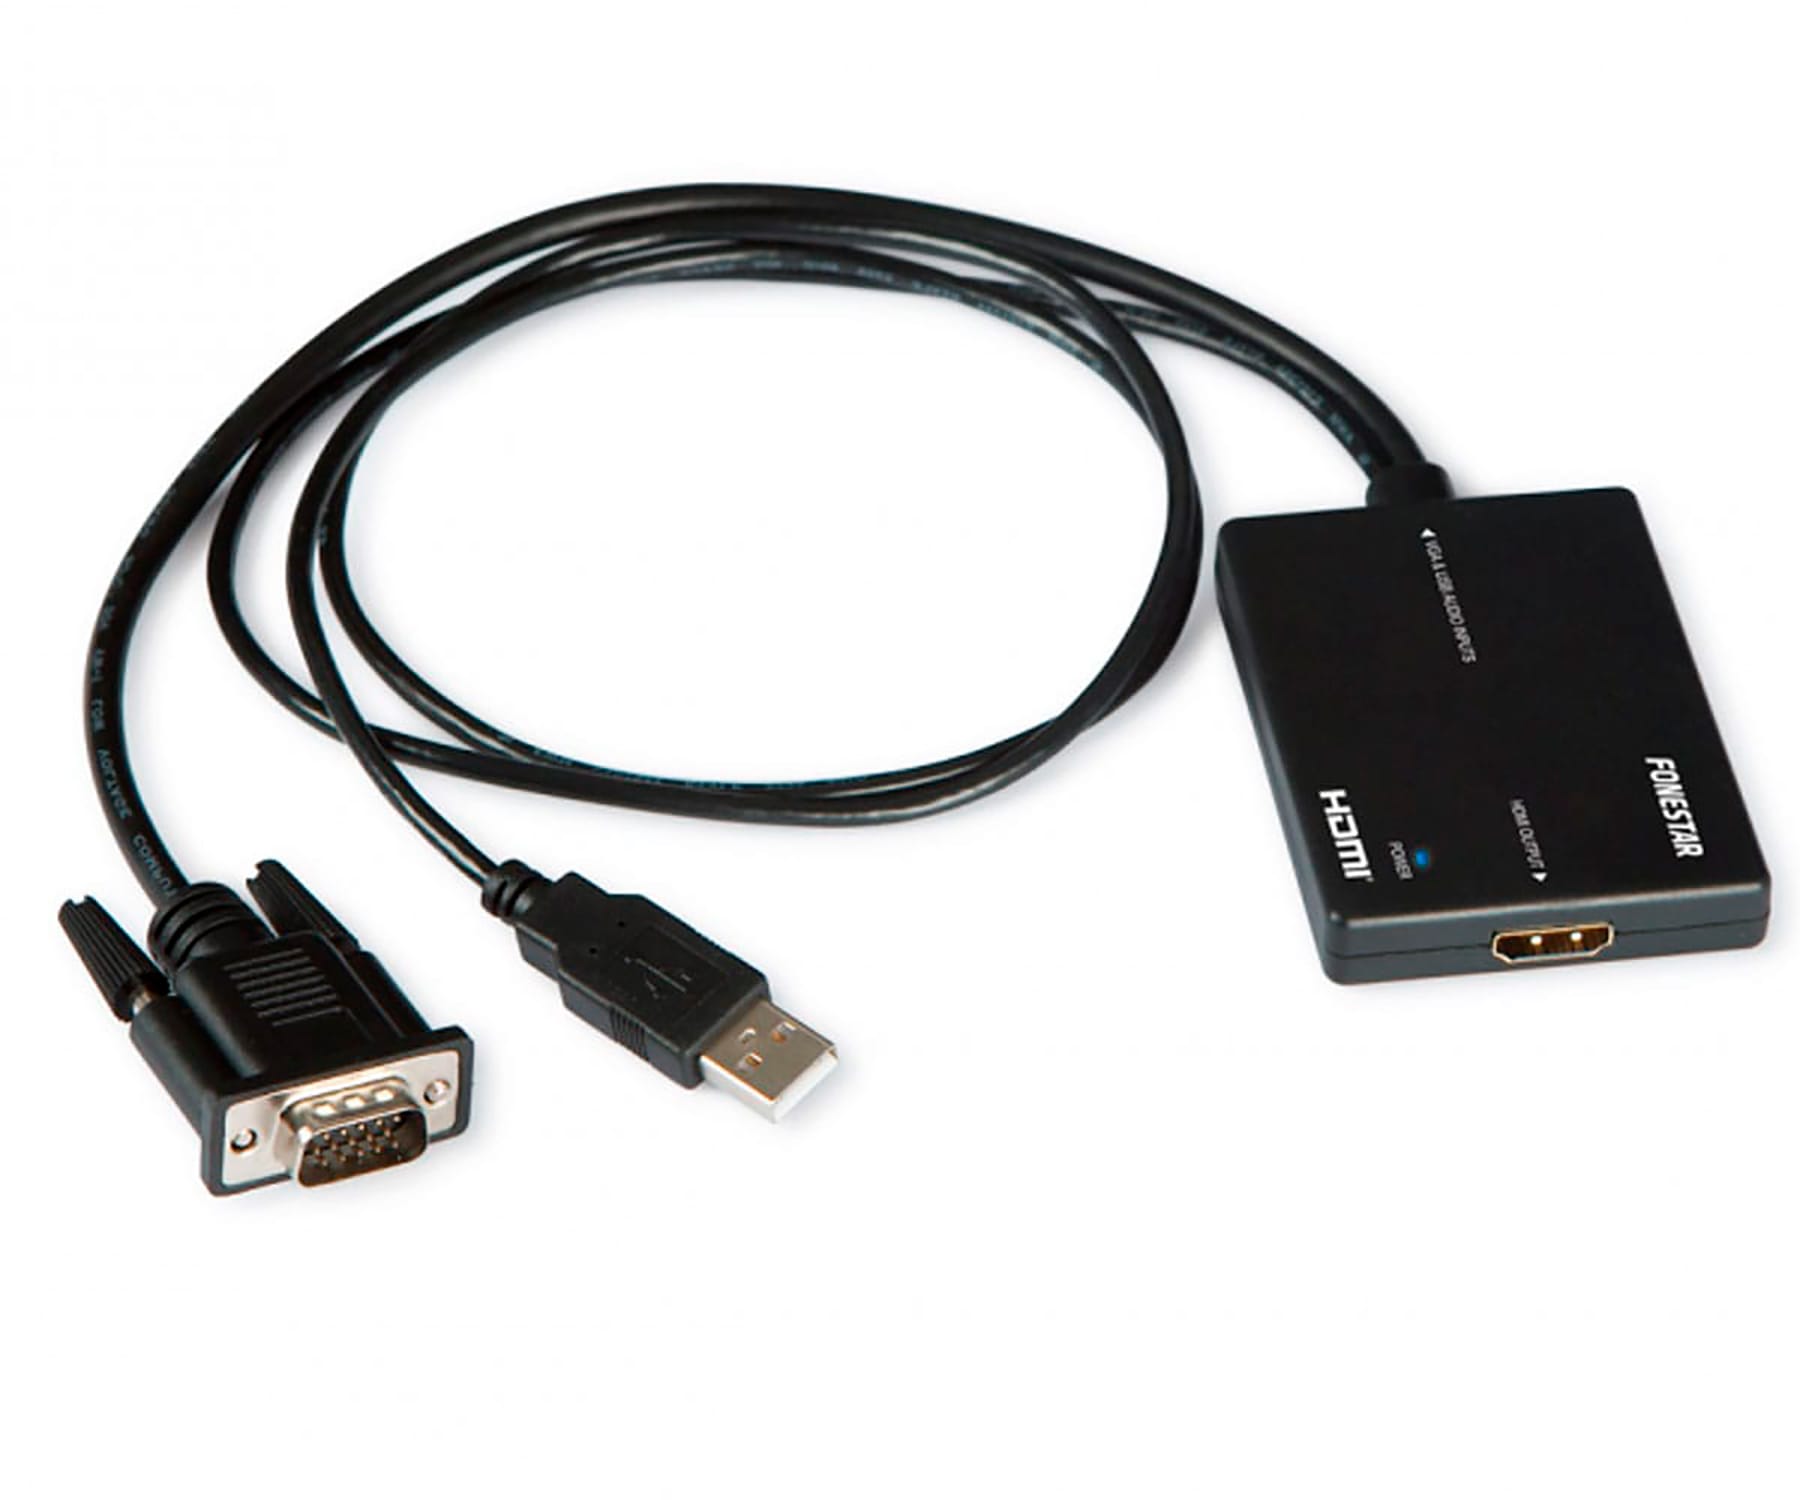 FONESTAR FO-445 / CONVERTIDOR DE VGA Y AUDIO USB A HDMI